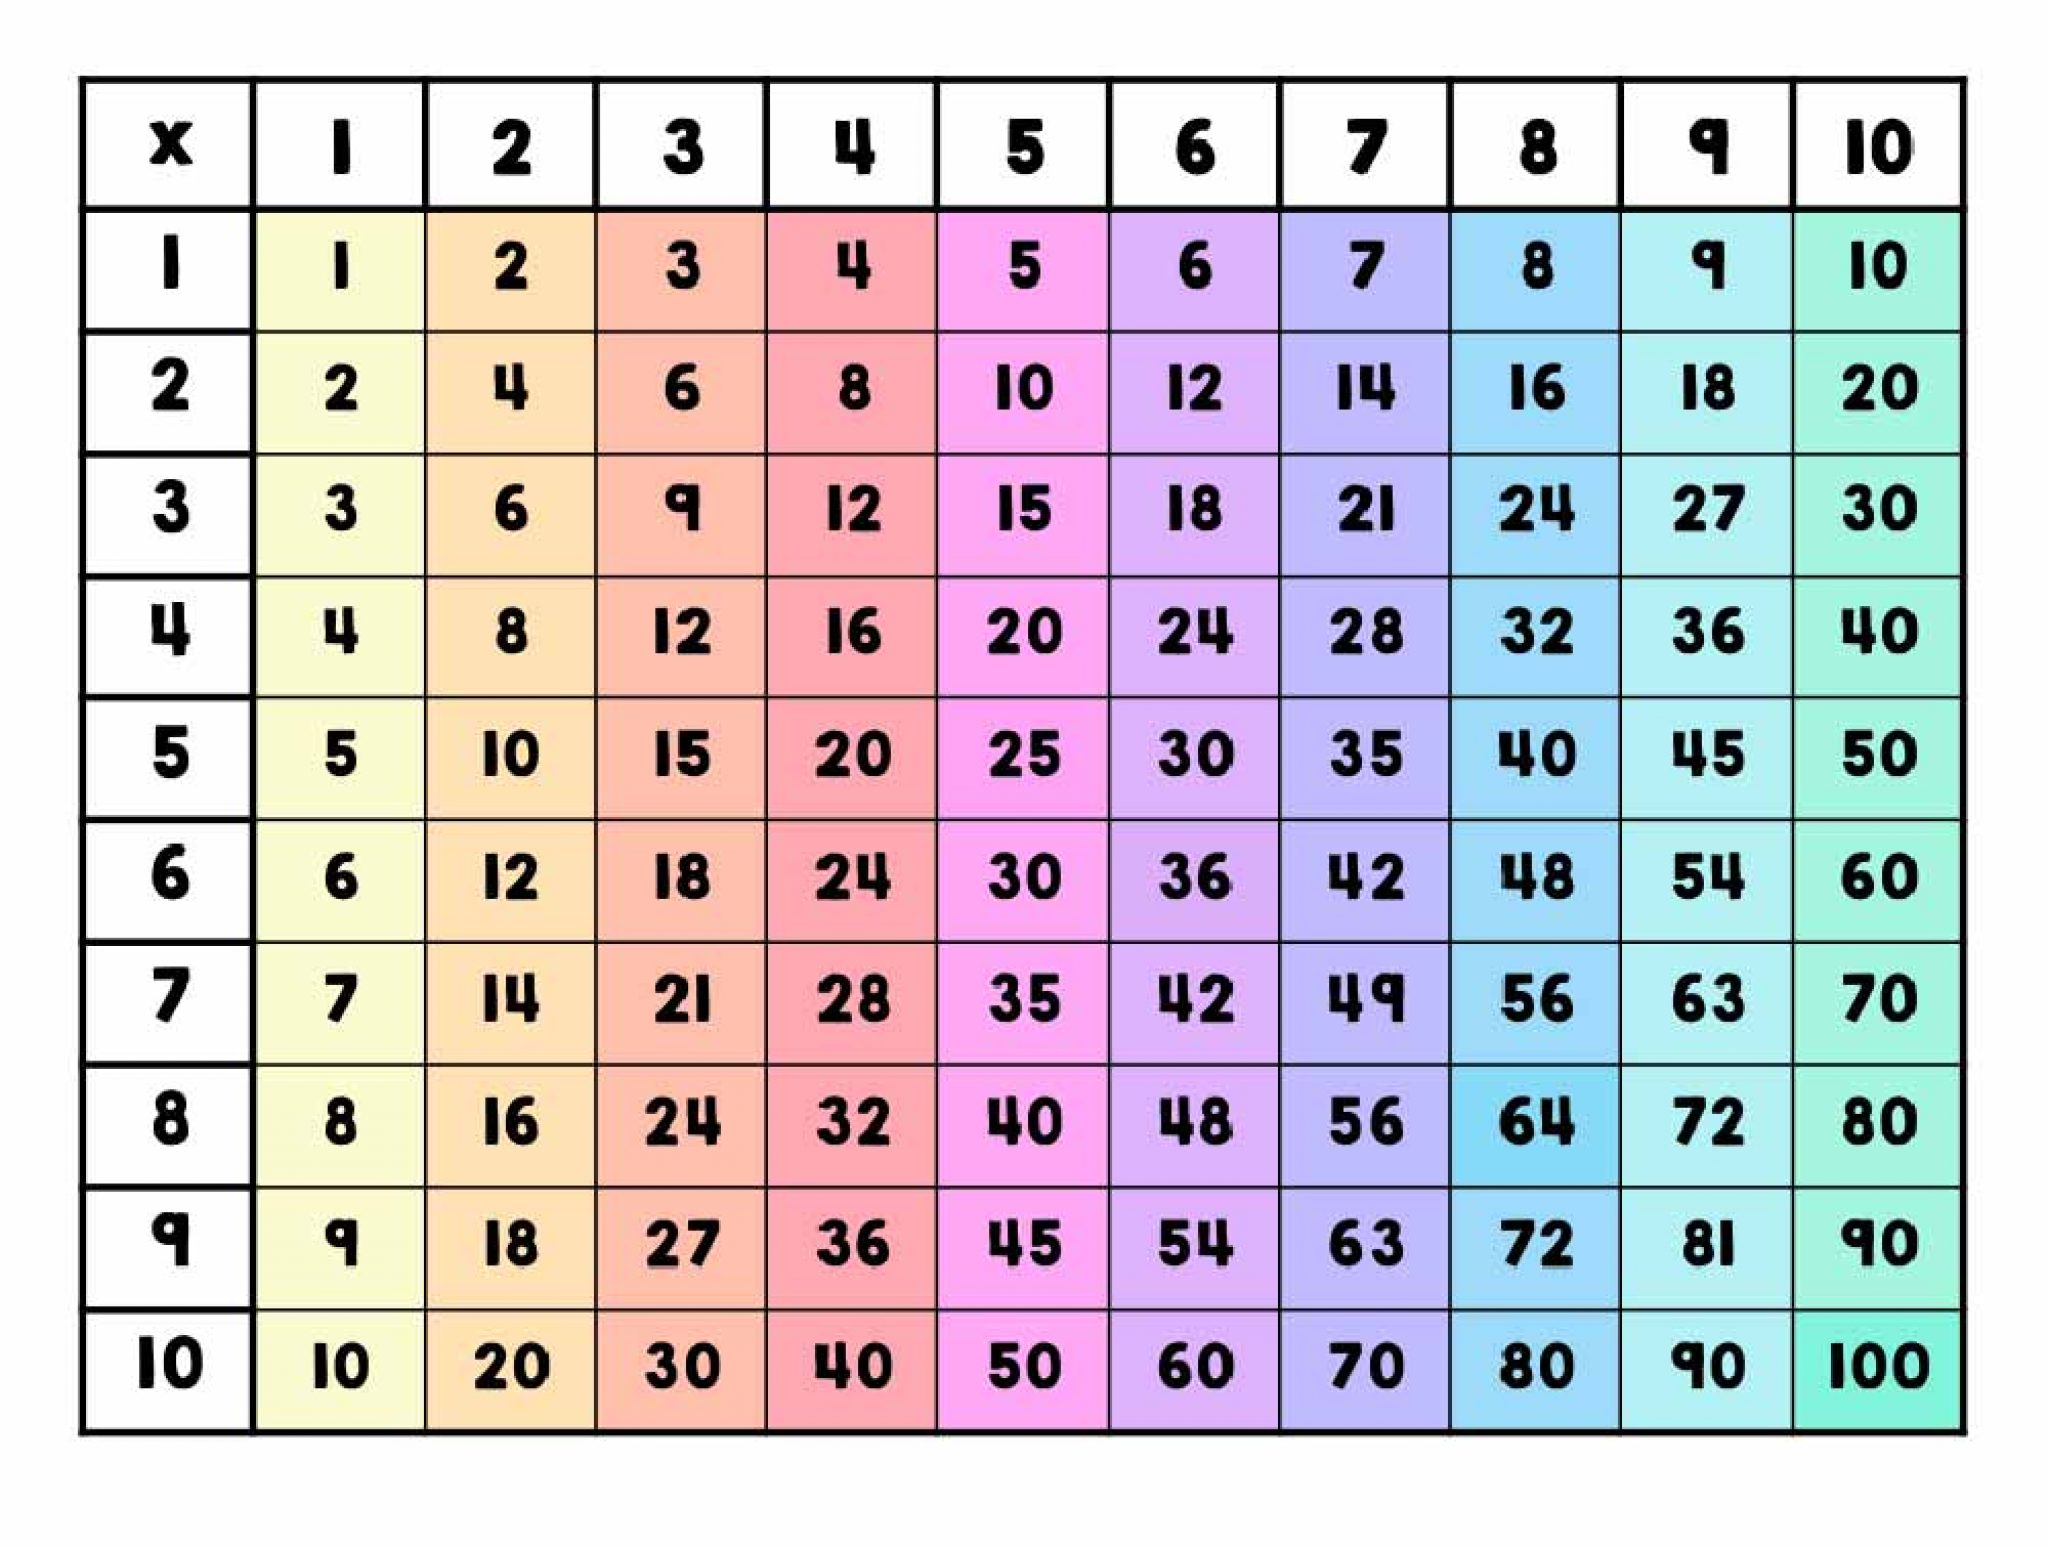 Multiplication Table до 100